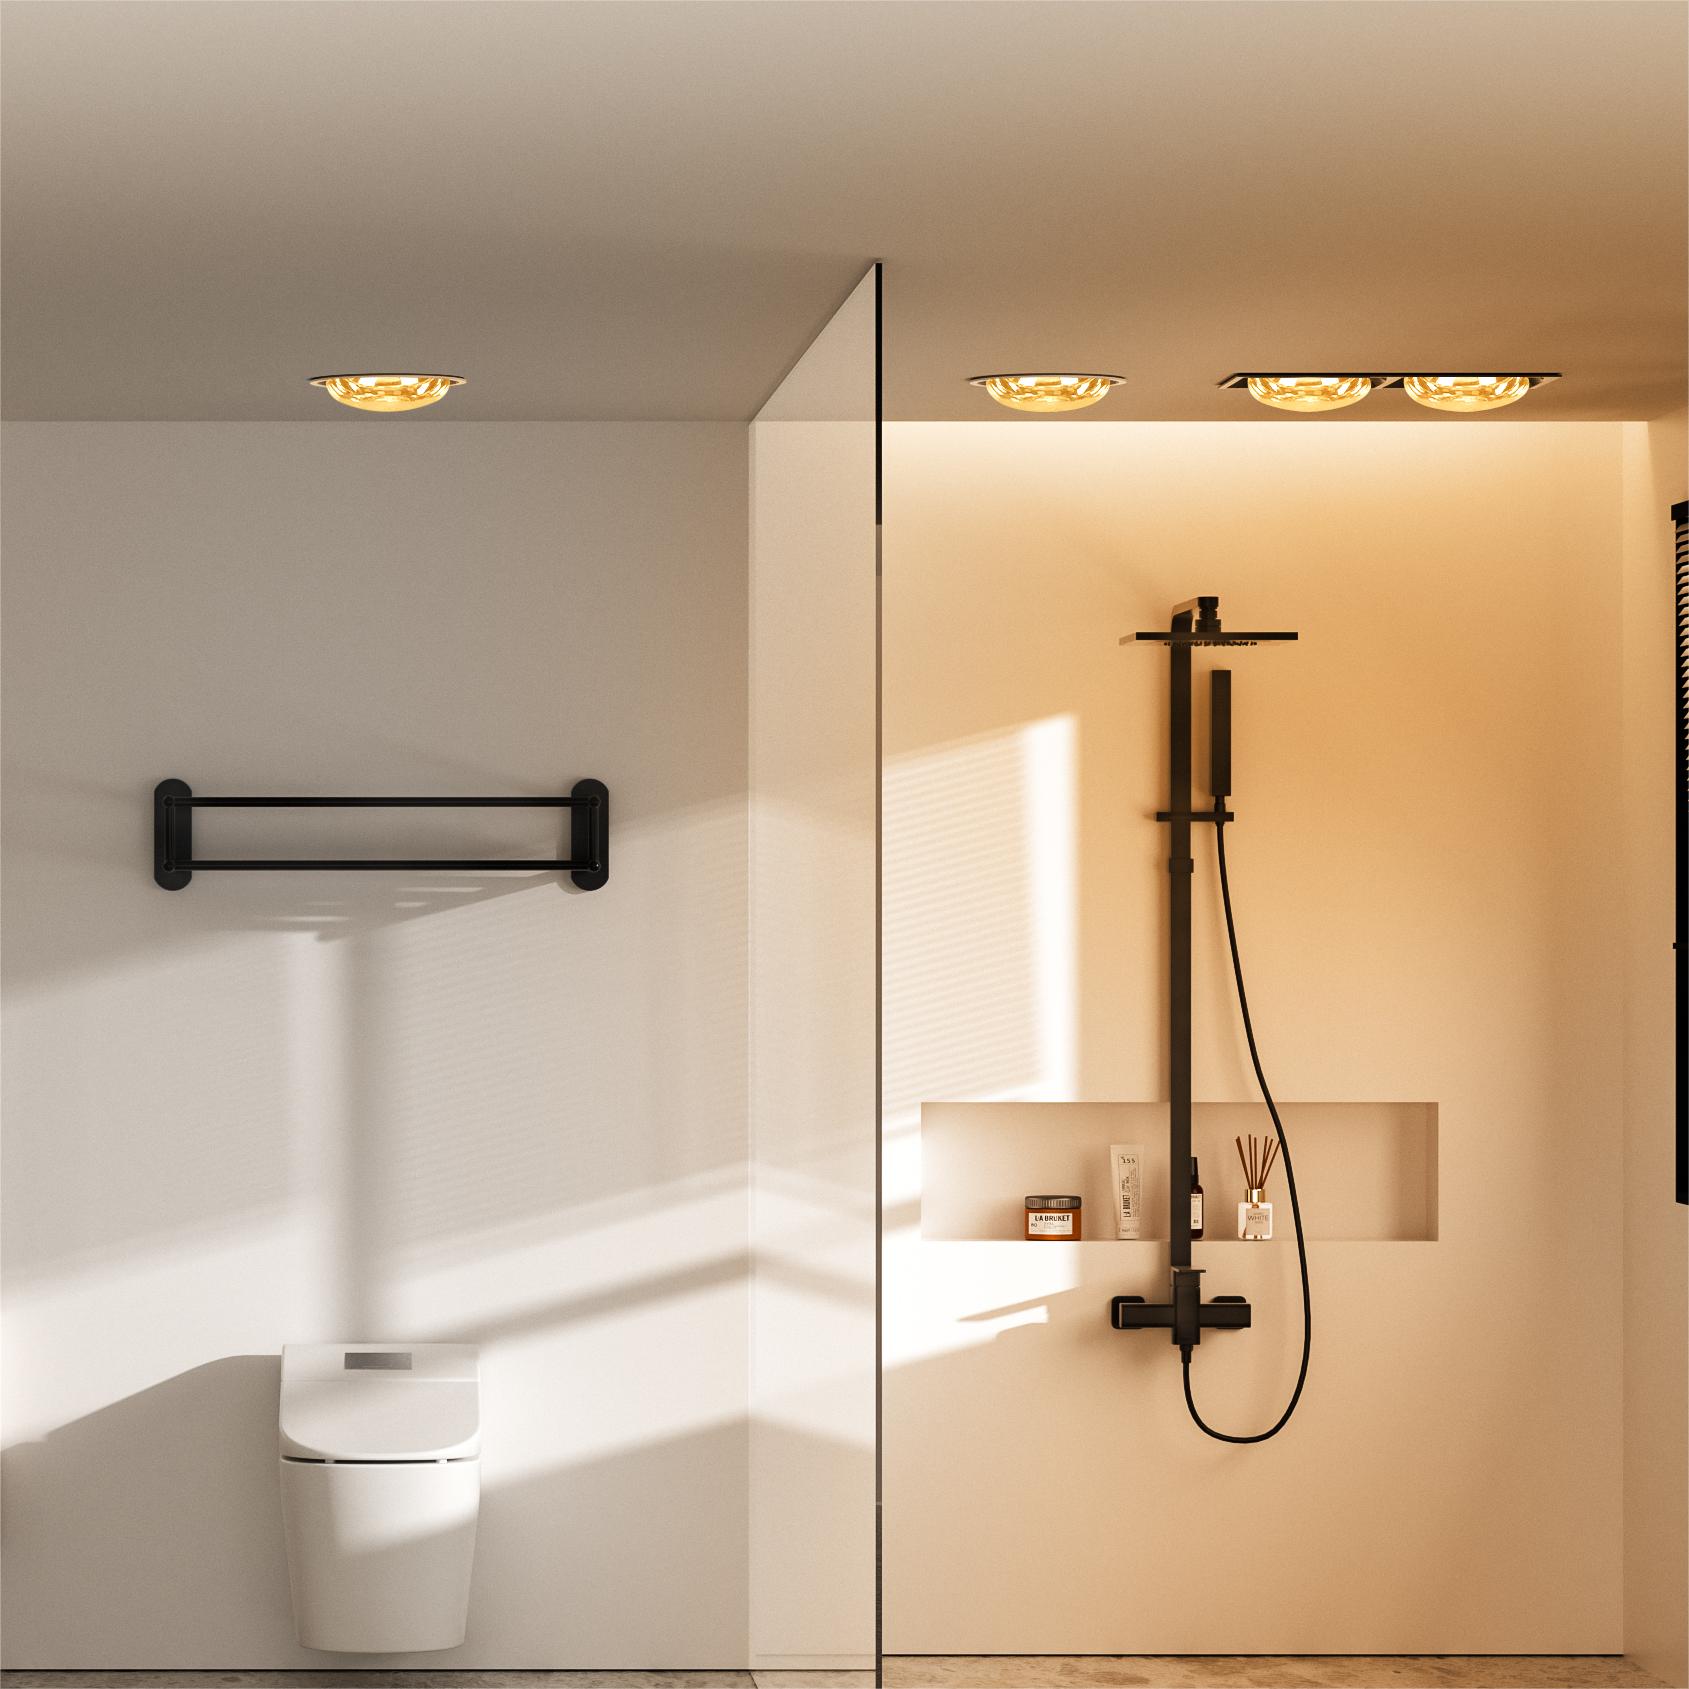 Simple Ceiling Decorative Bath Light